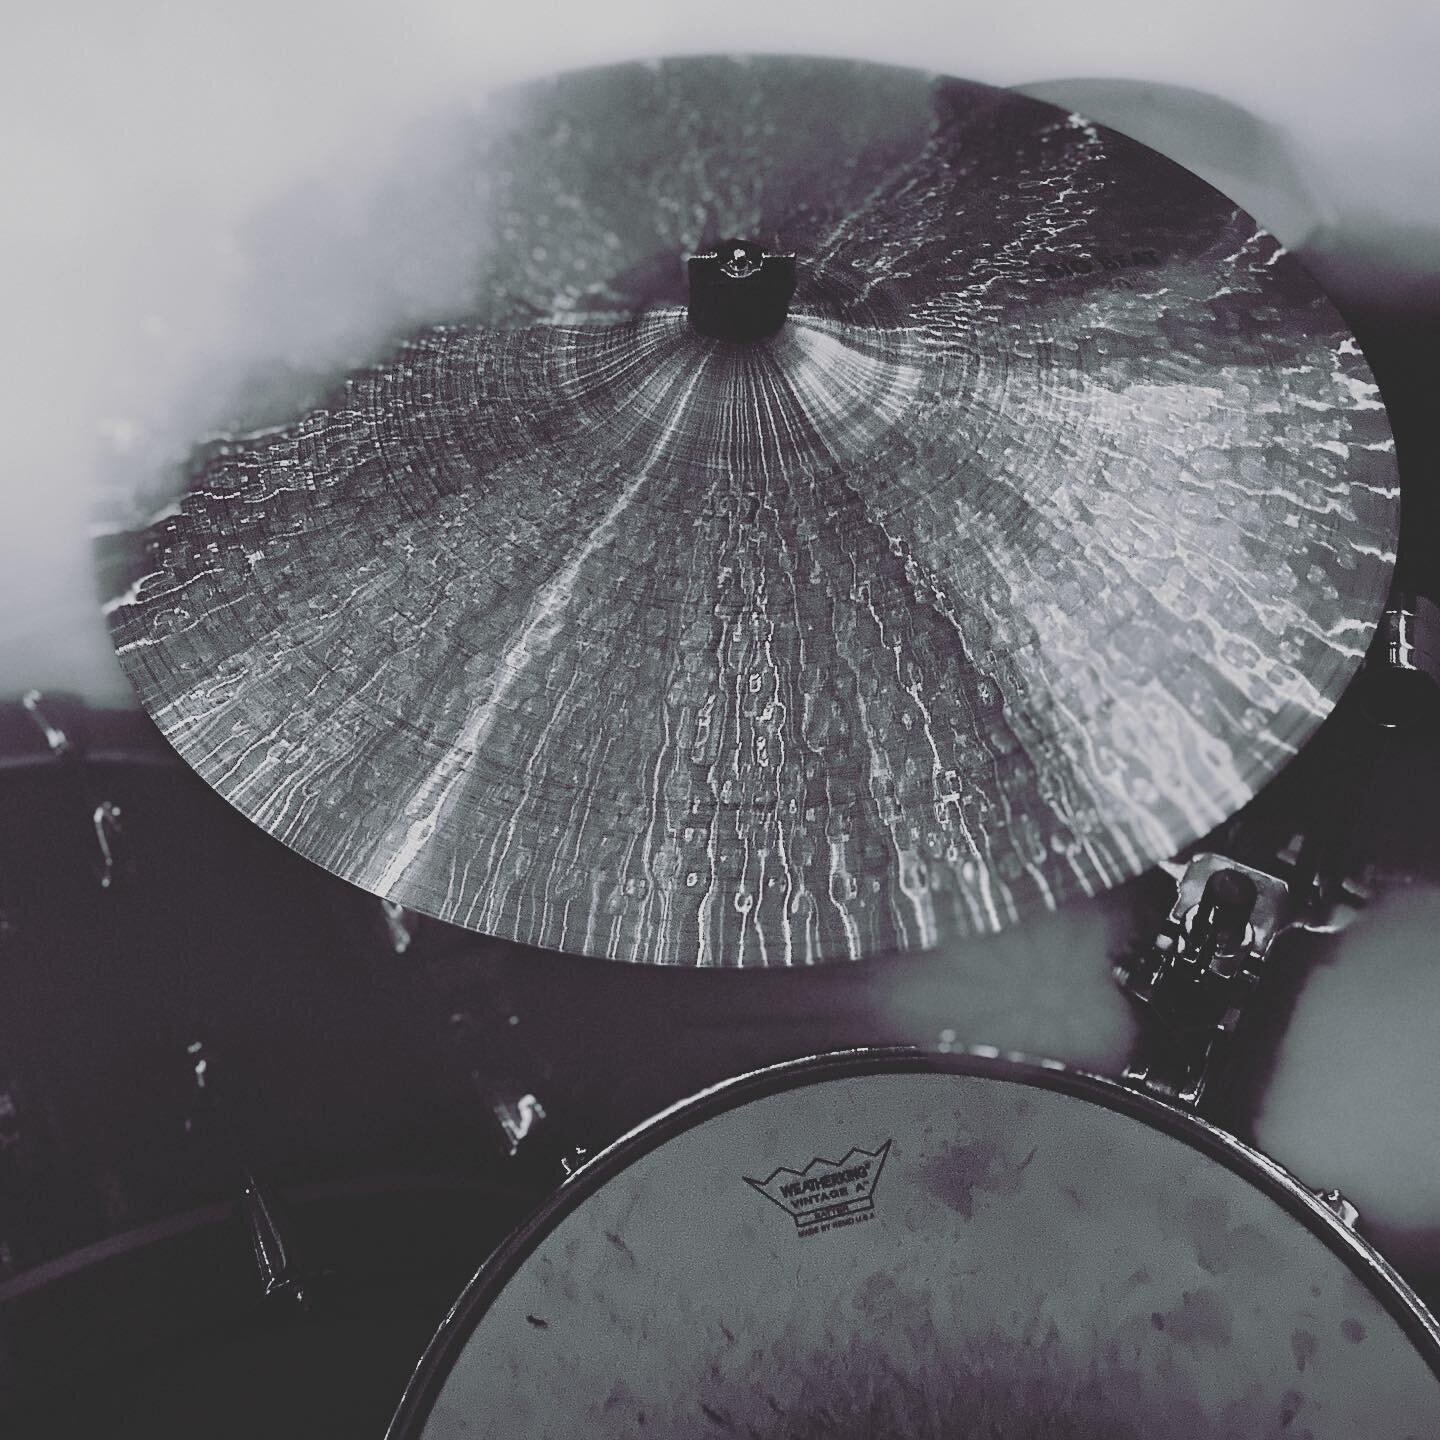 Wolfgear #remo #drums #practice #statenisland #statenislandmusic